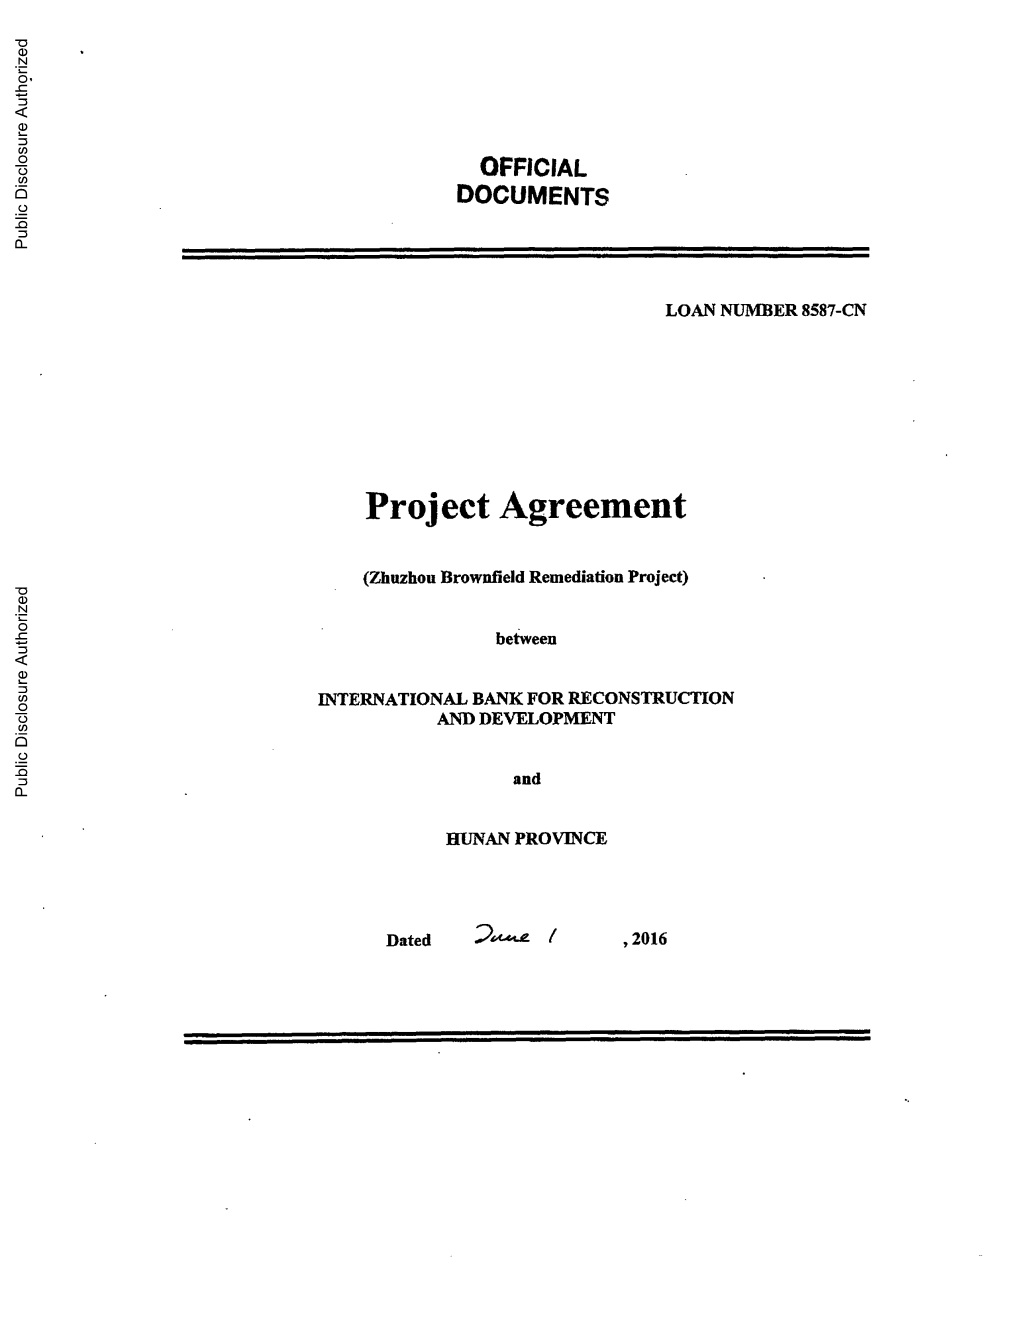 Project Agreement Public Disclosure Authorized